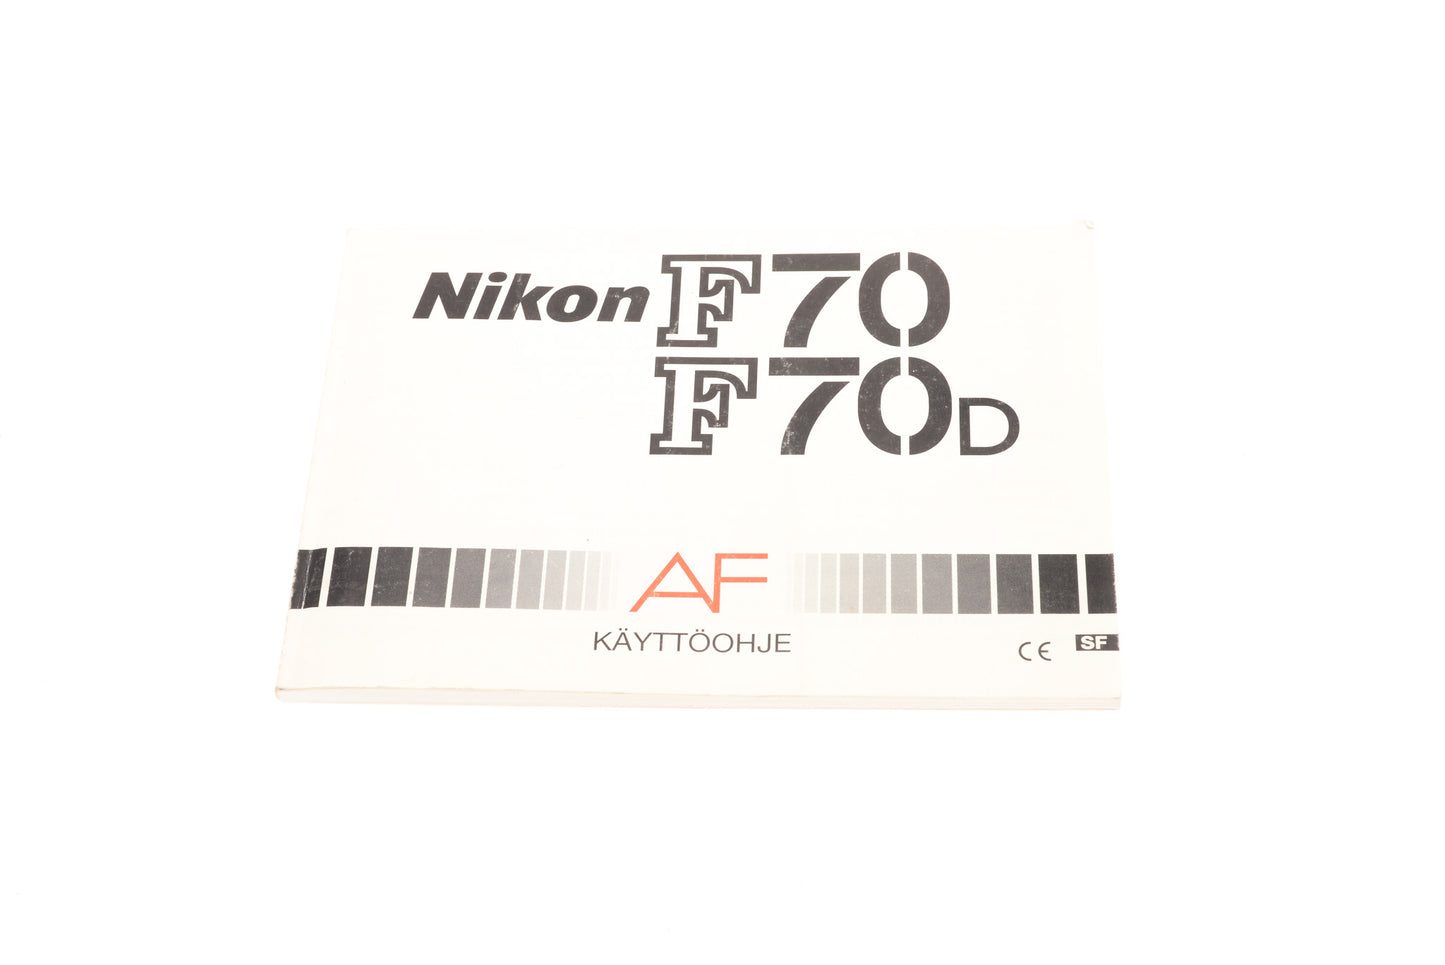 Nikon F70/F70D Käyttöohje - Accessory